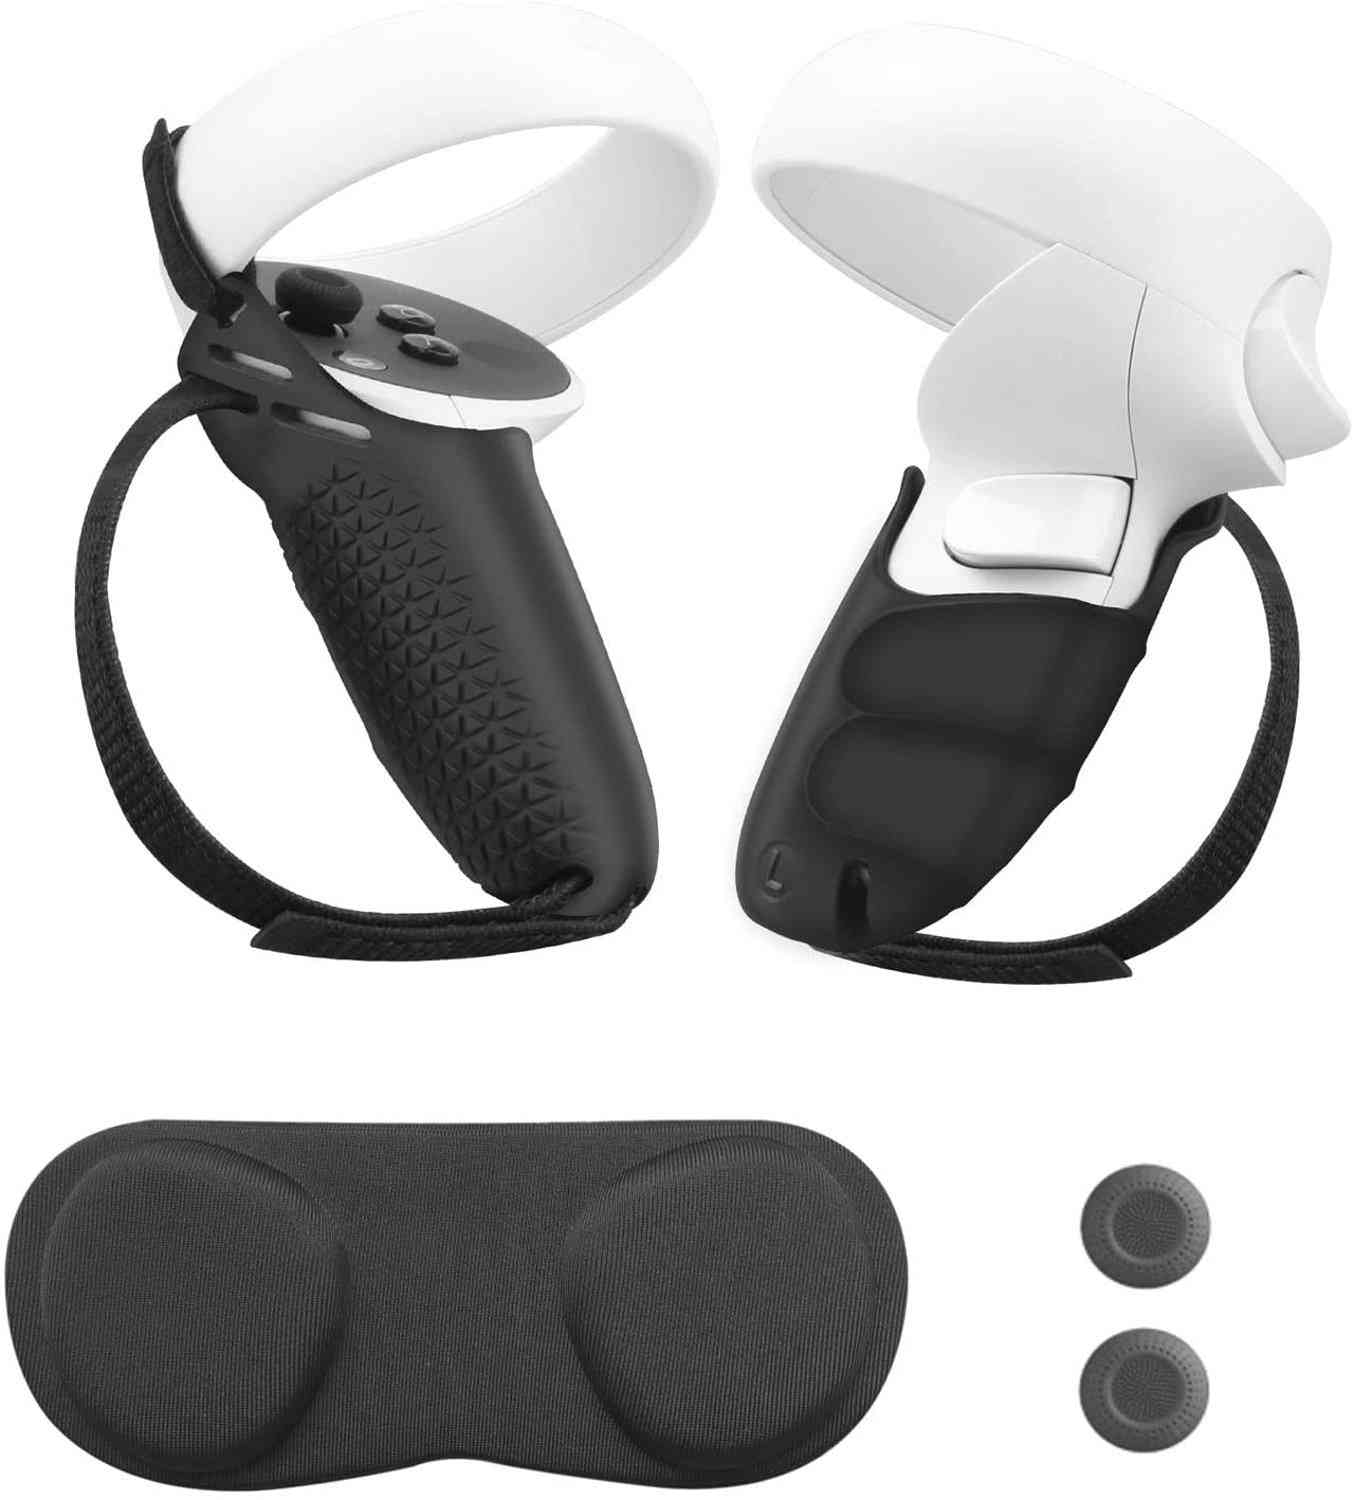 Prémiový silikon, kryt držadla, nastavitelný pásek na koleno pro Oculus Quest, 2vr vr dotykový ovladač